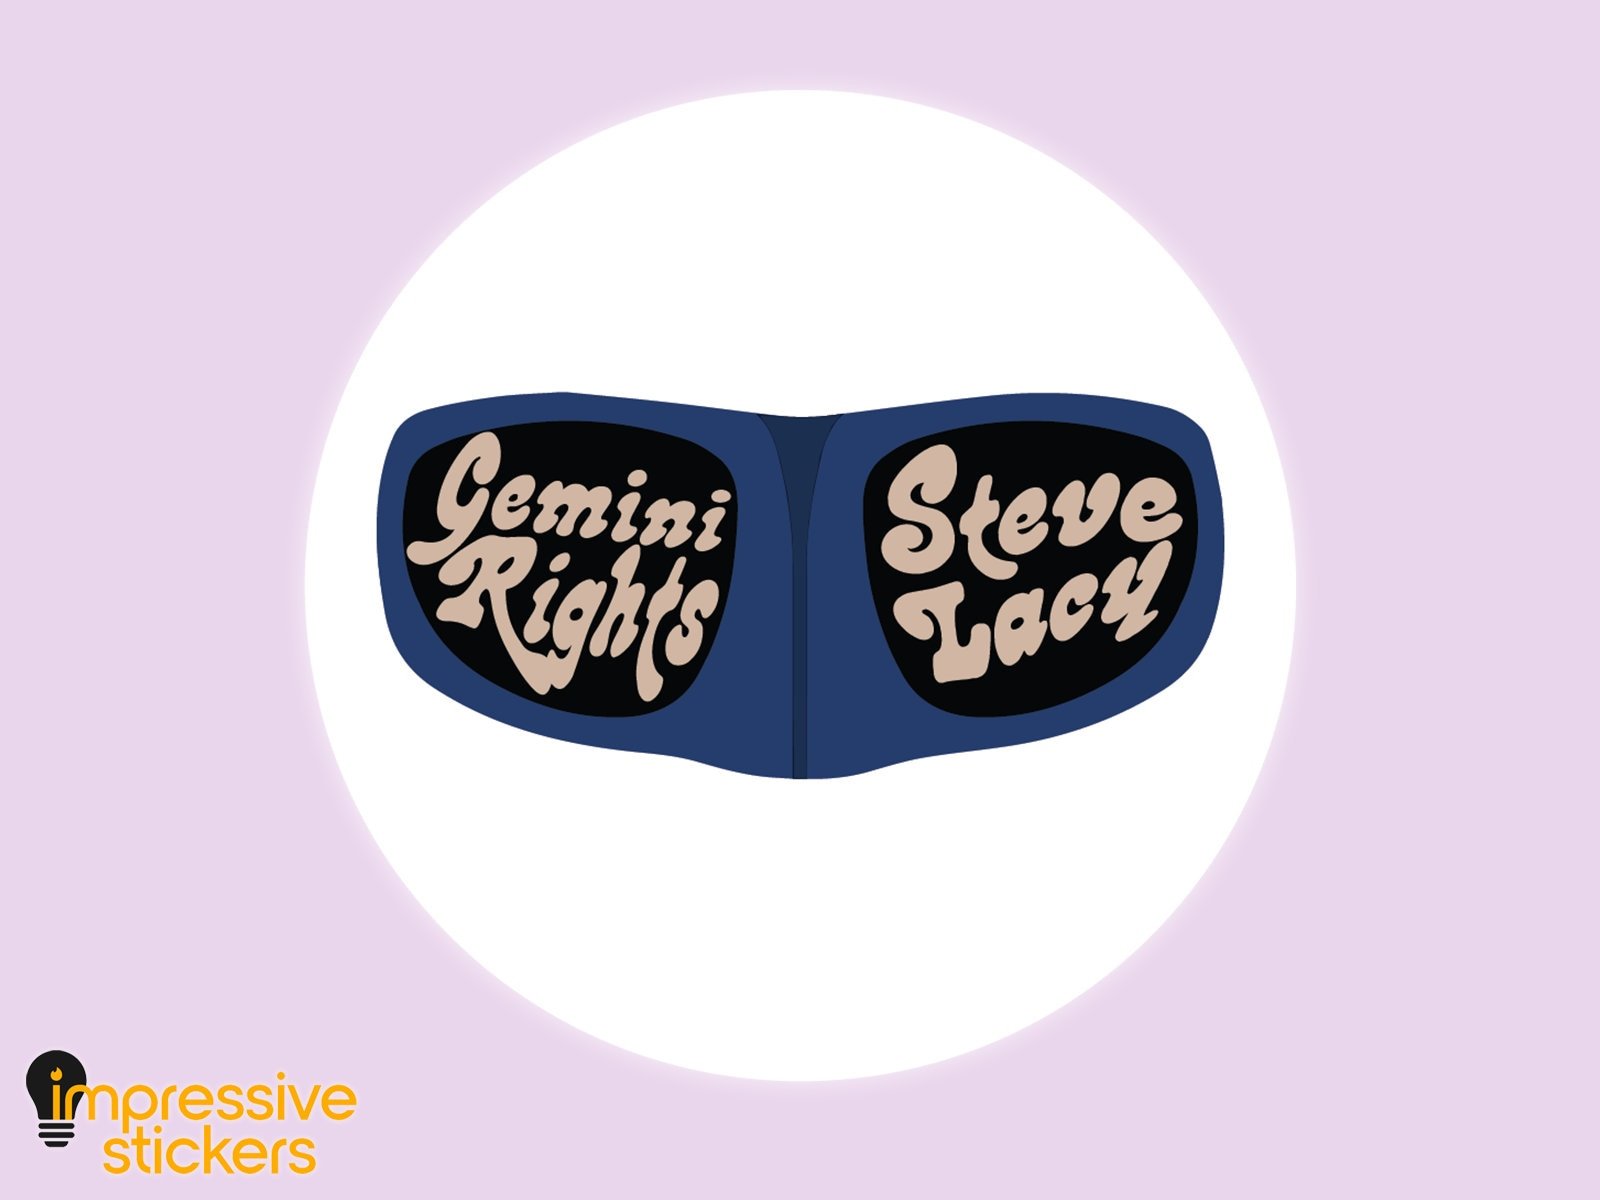 Steve Lacy gemini Rights Glasses Glossy Sticker